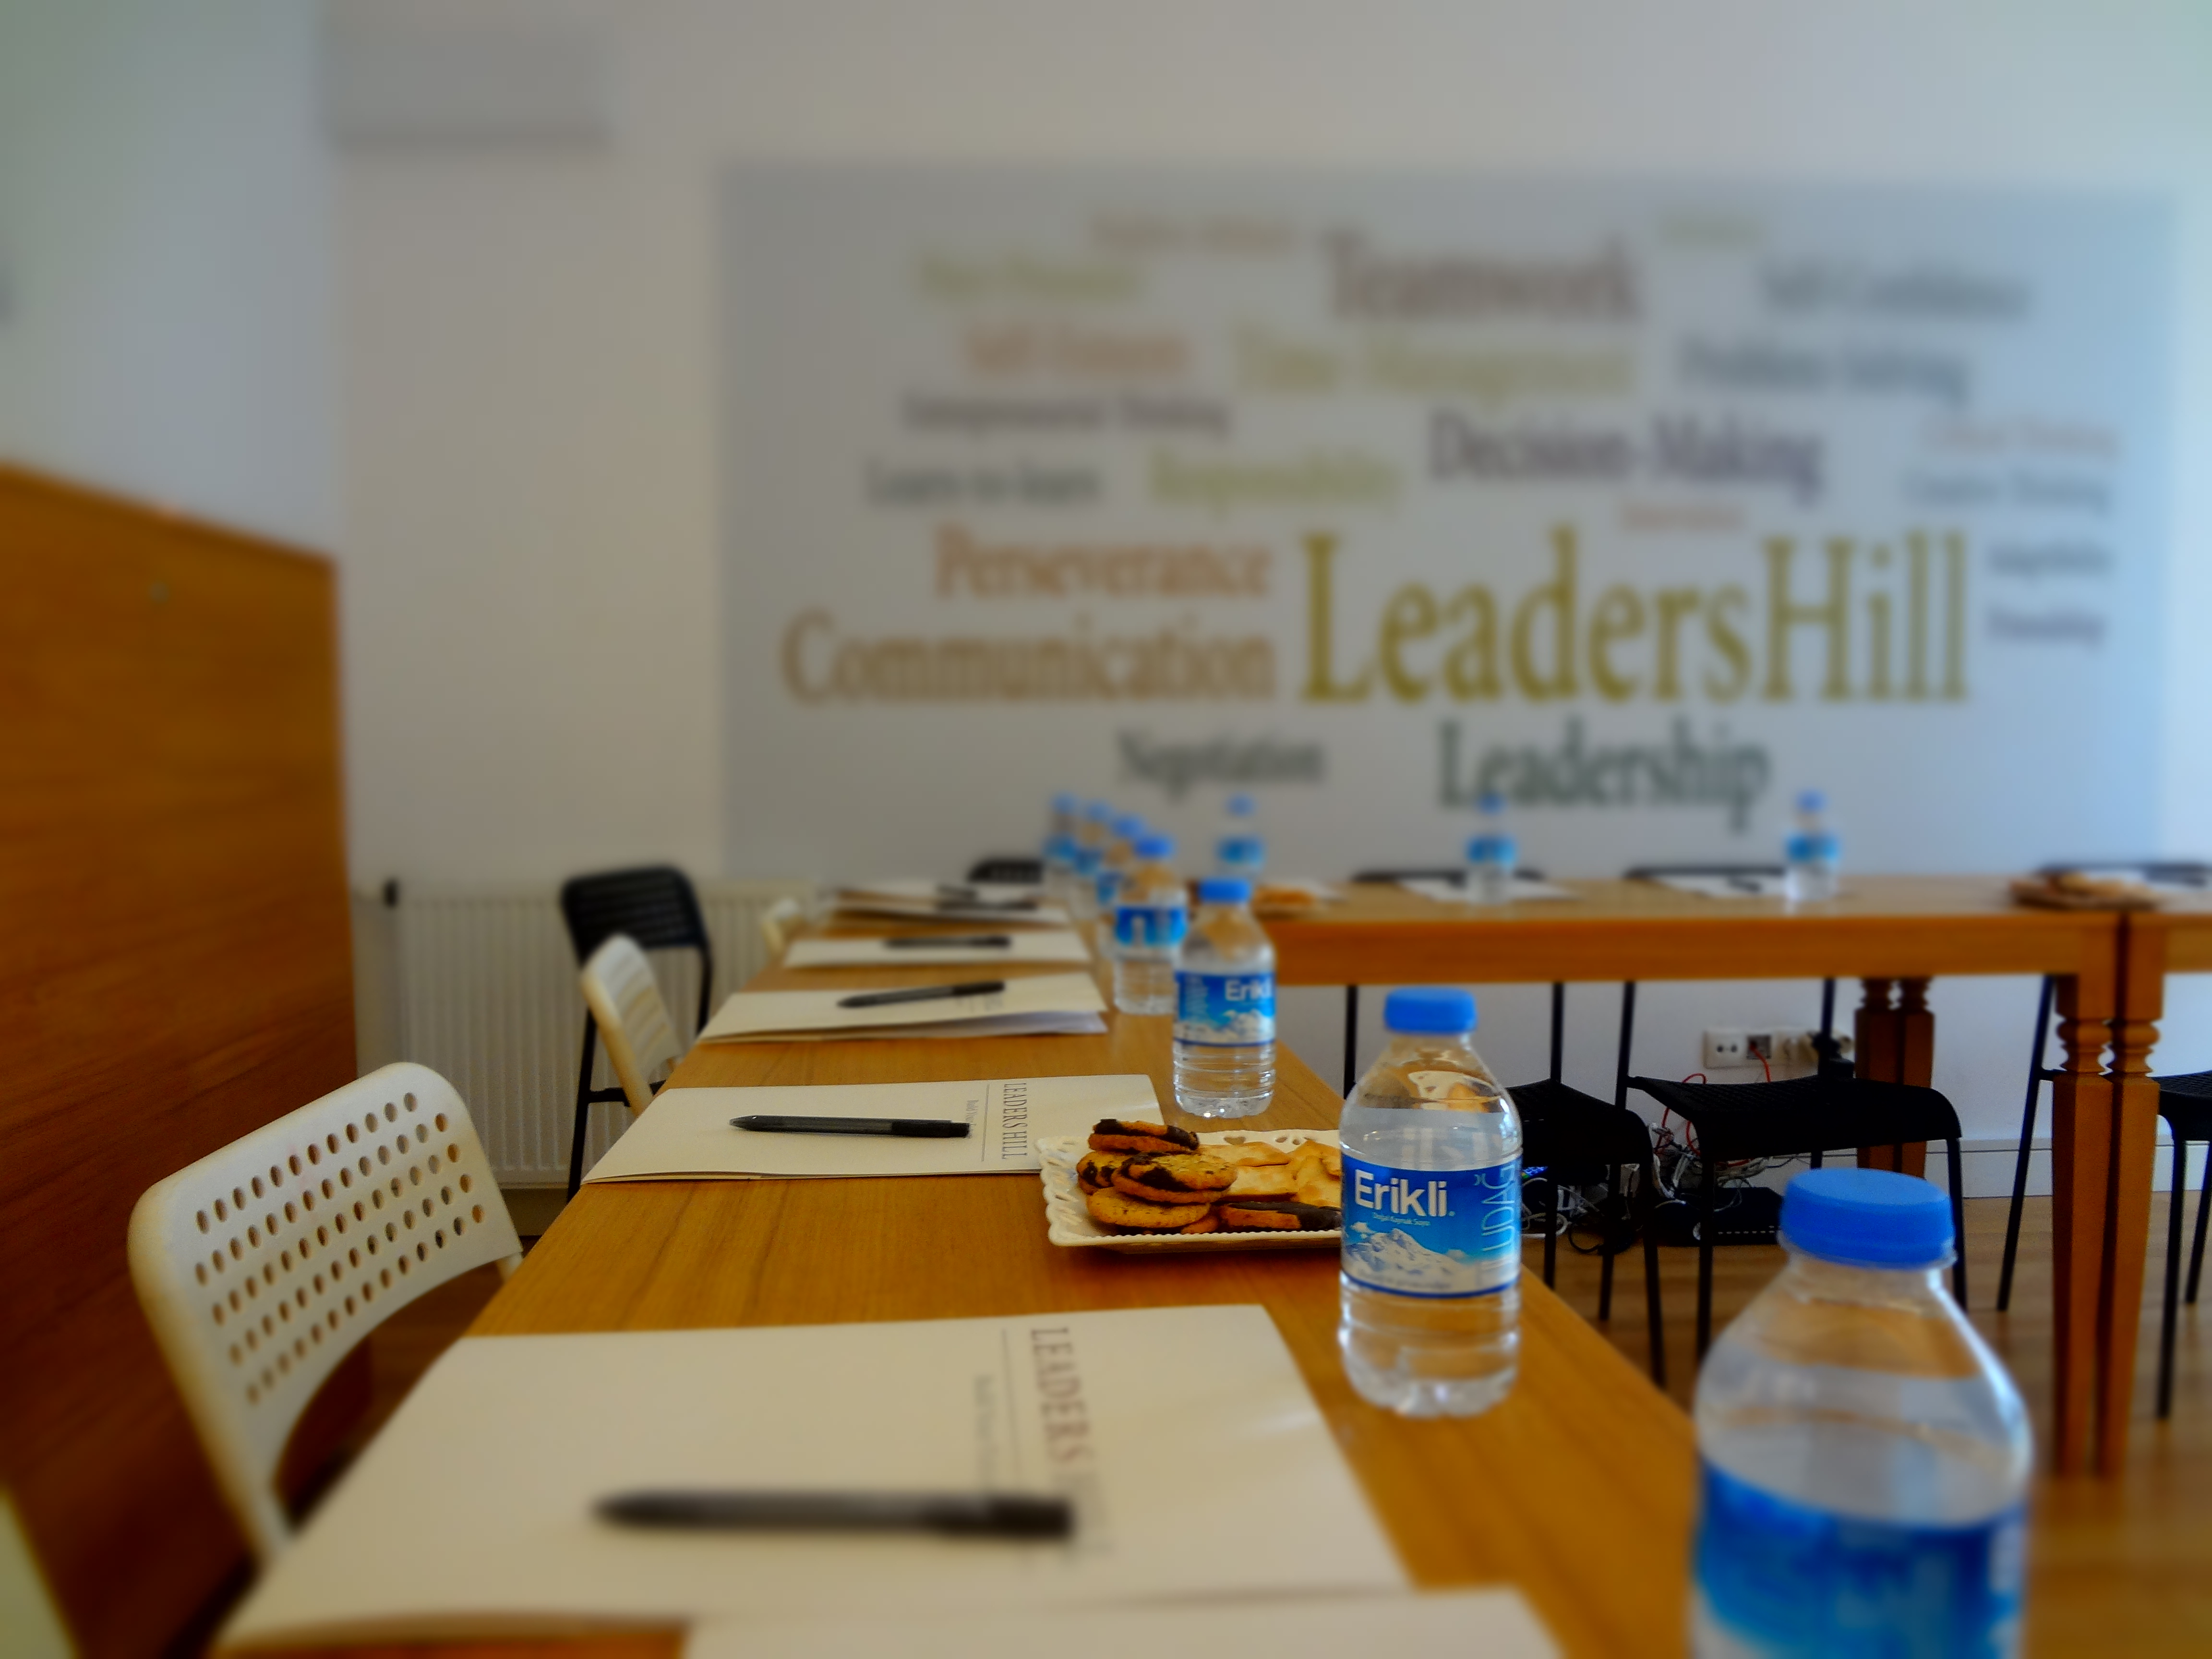 Leaders Hill Workshops